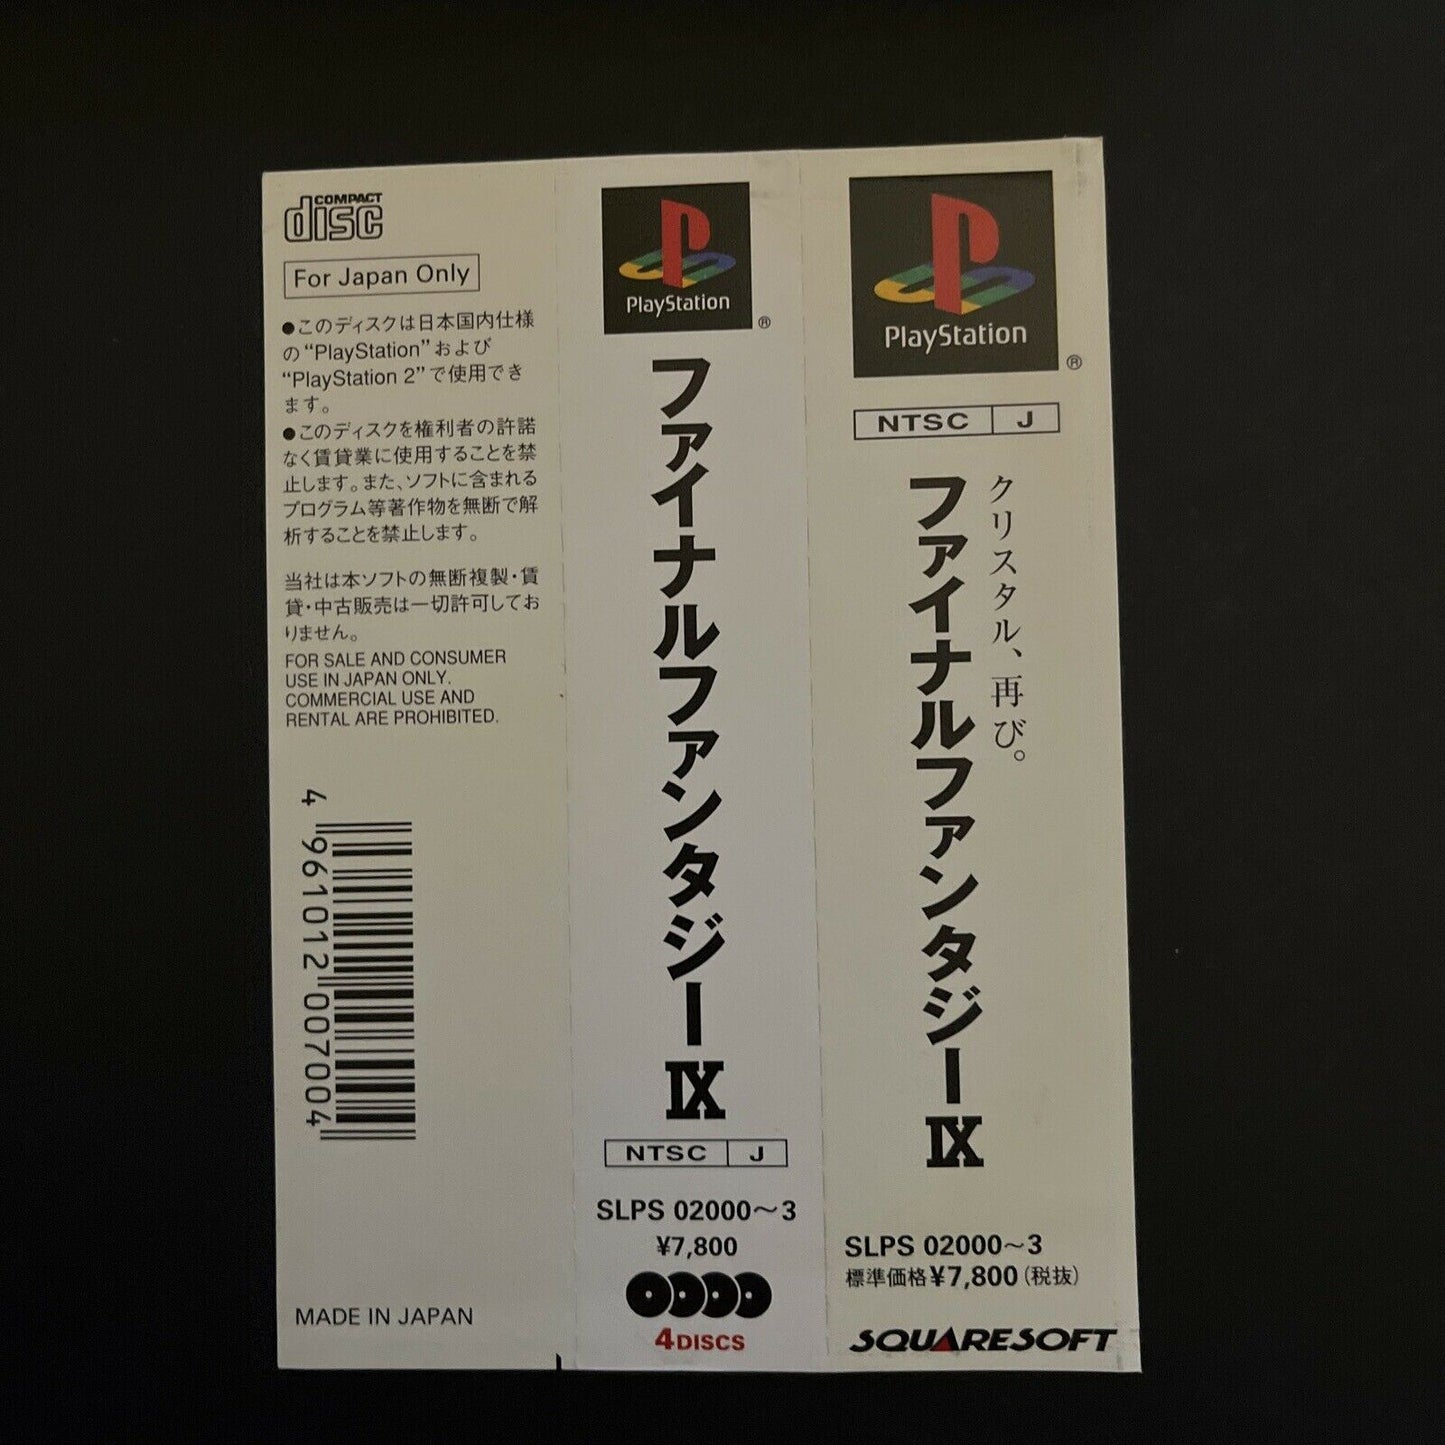 Final Fantasy IX 9 - PlayStation PS1 NTSC-J Japan FF9 RPG Game Complete